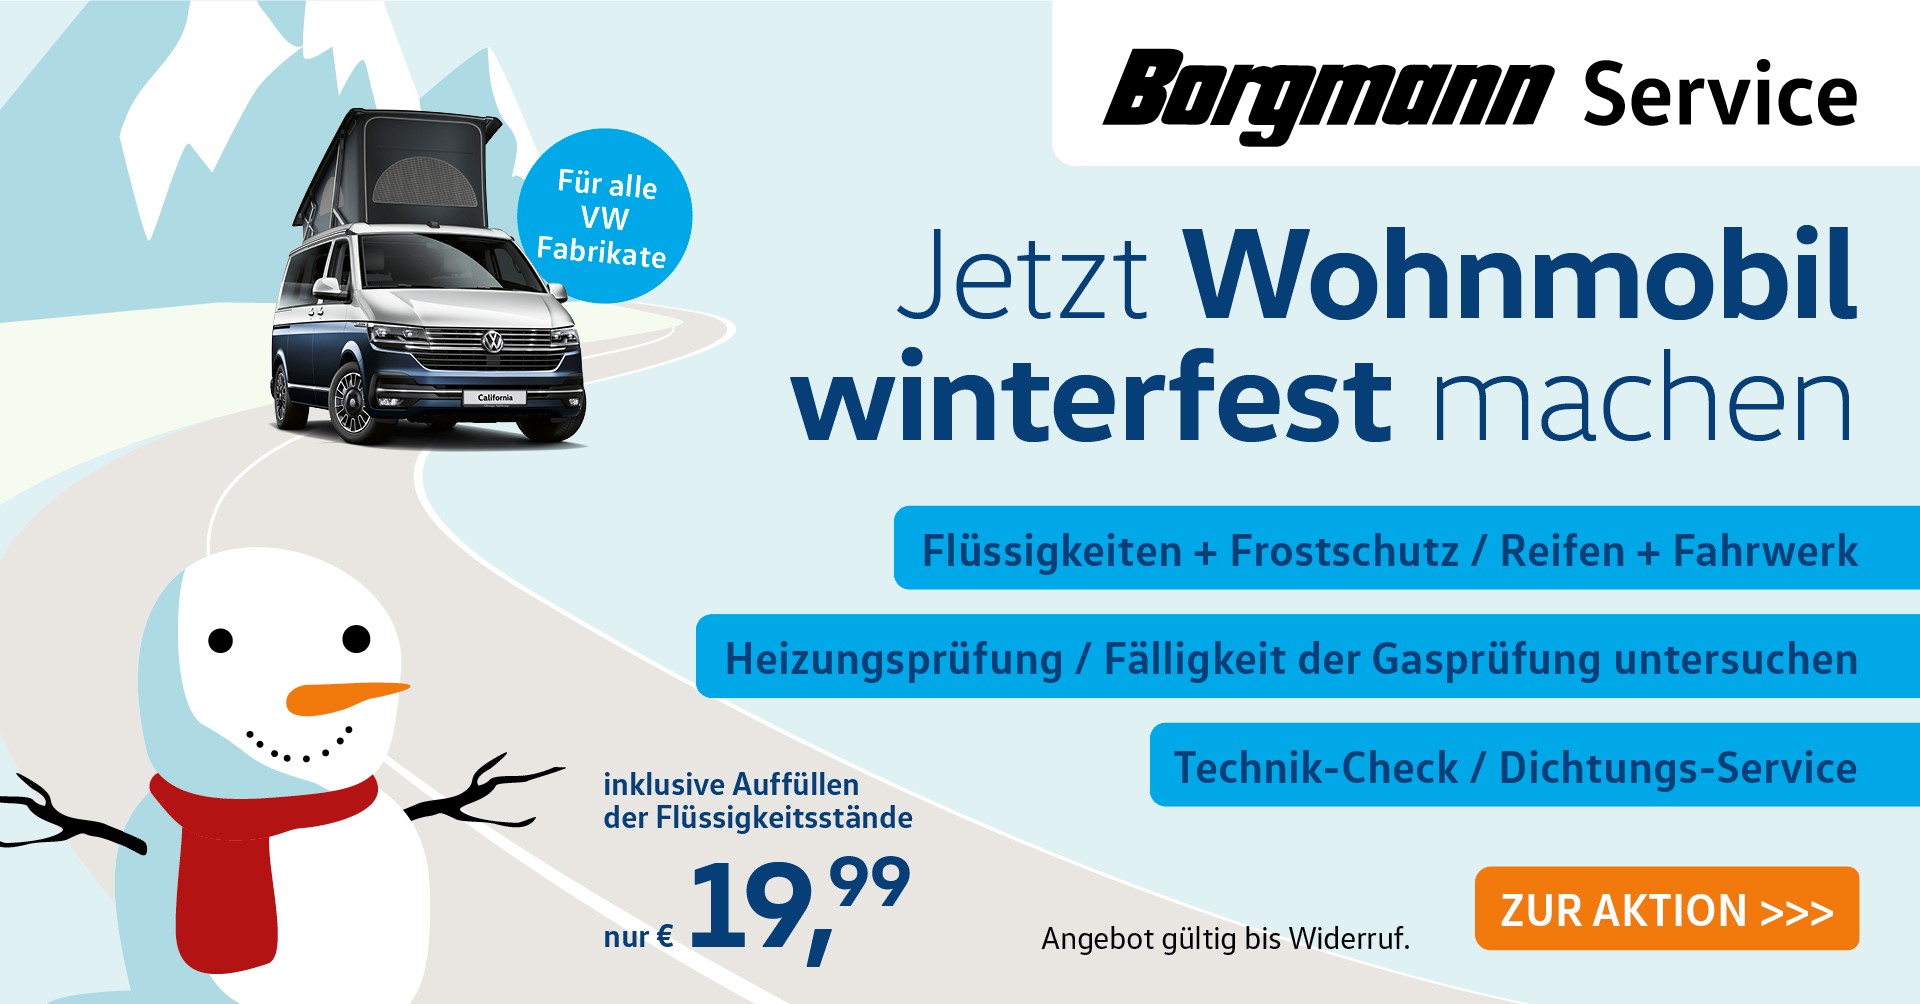 Wohnmobil Winter-Check bei Borgmann